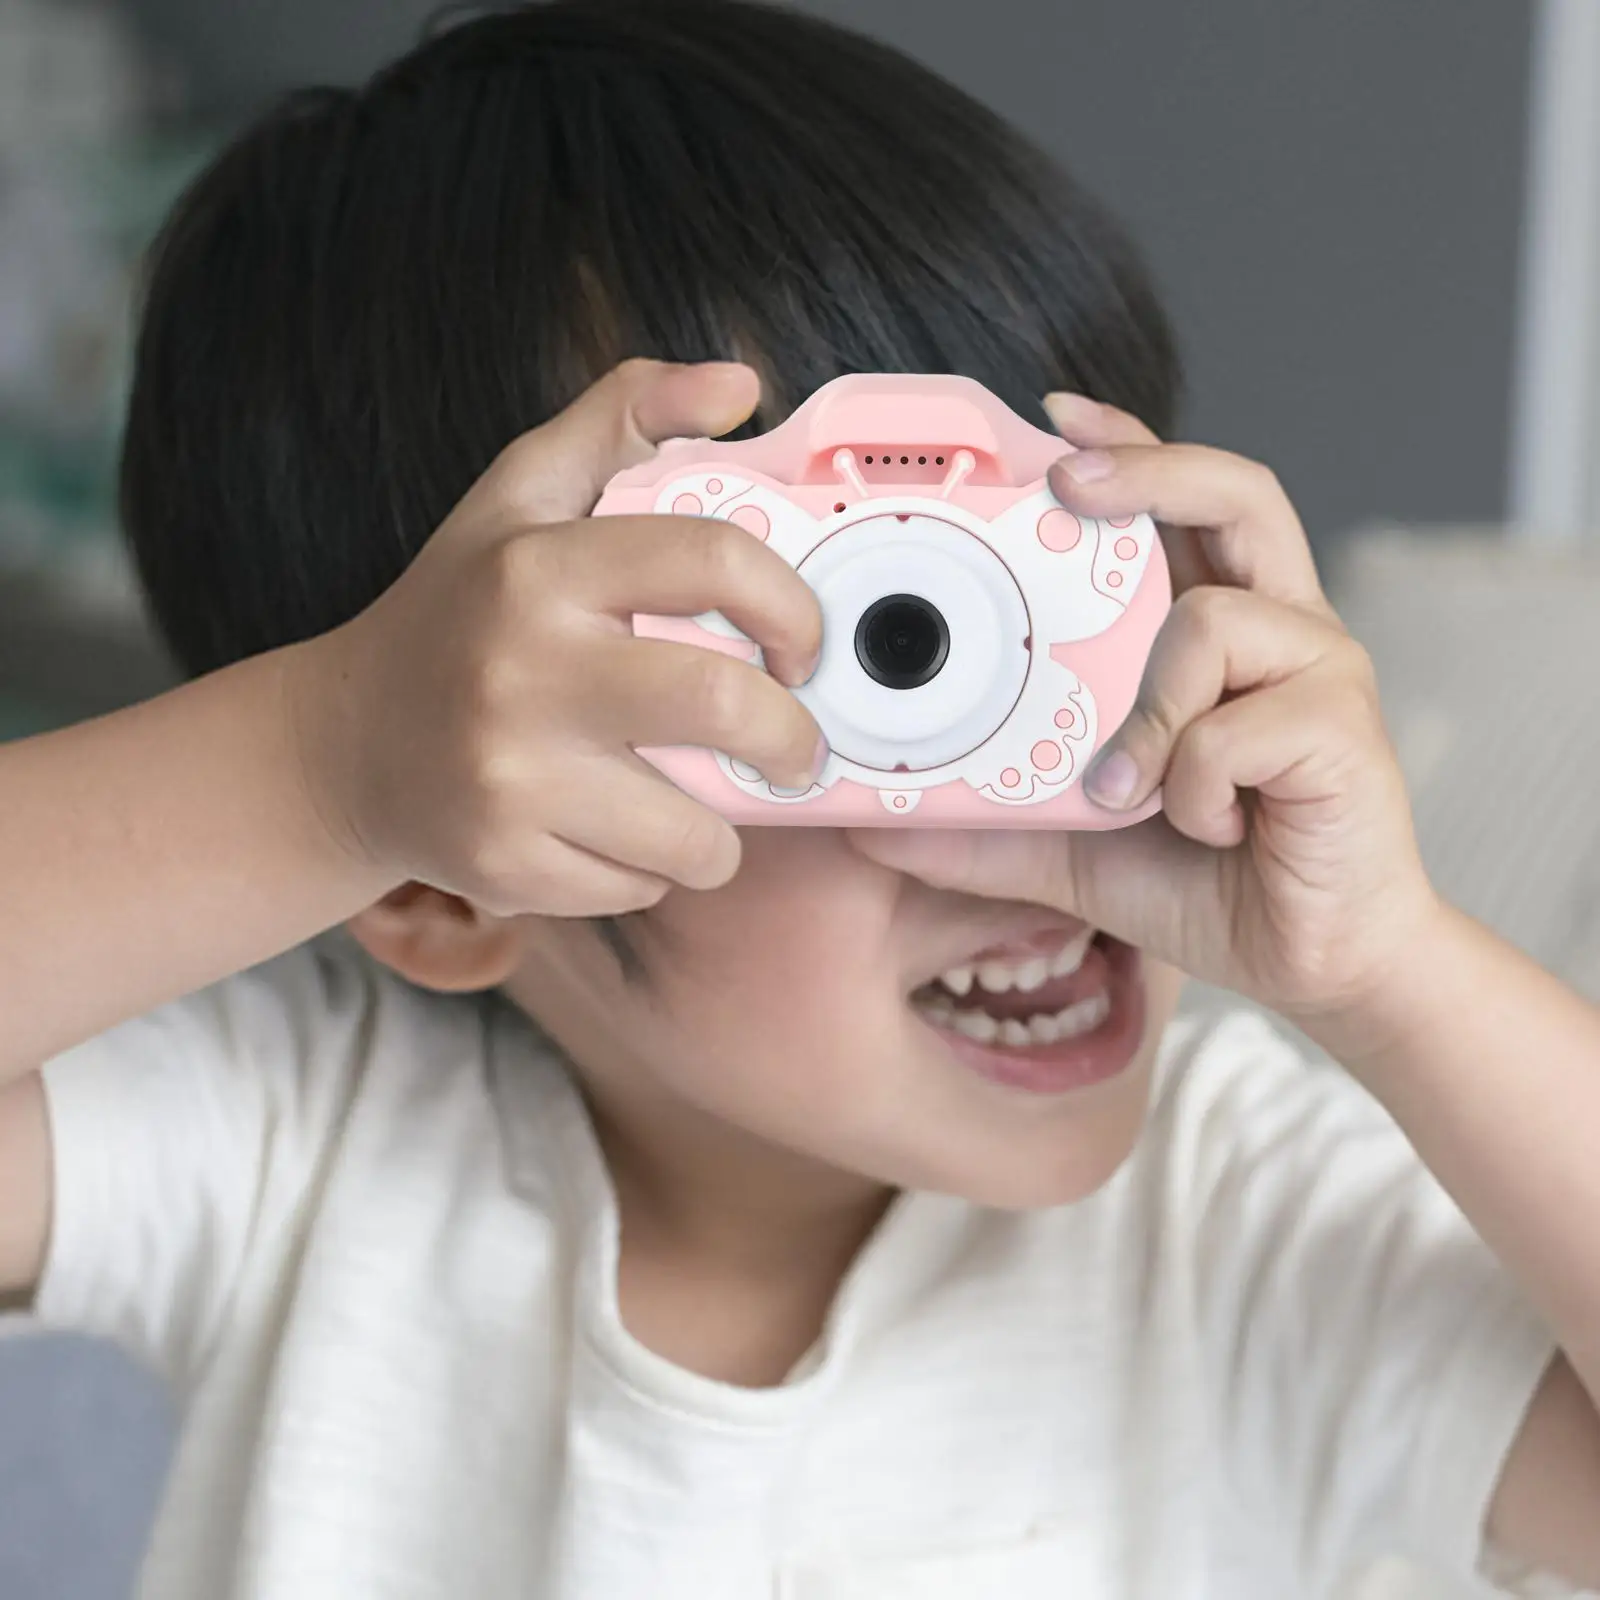 Cute Cameras for Kids Video Portable Children Digital Video Cameras